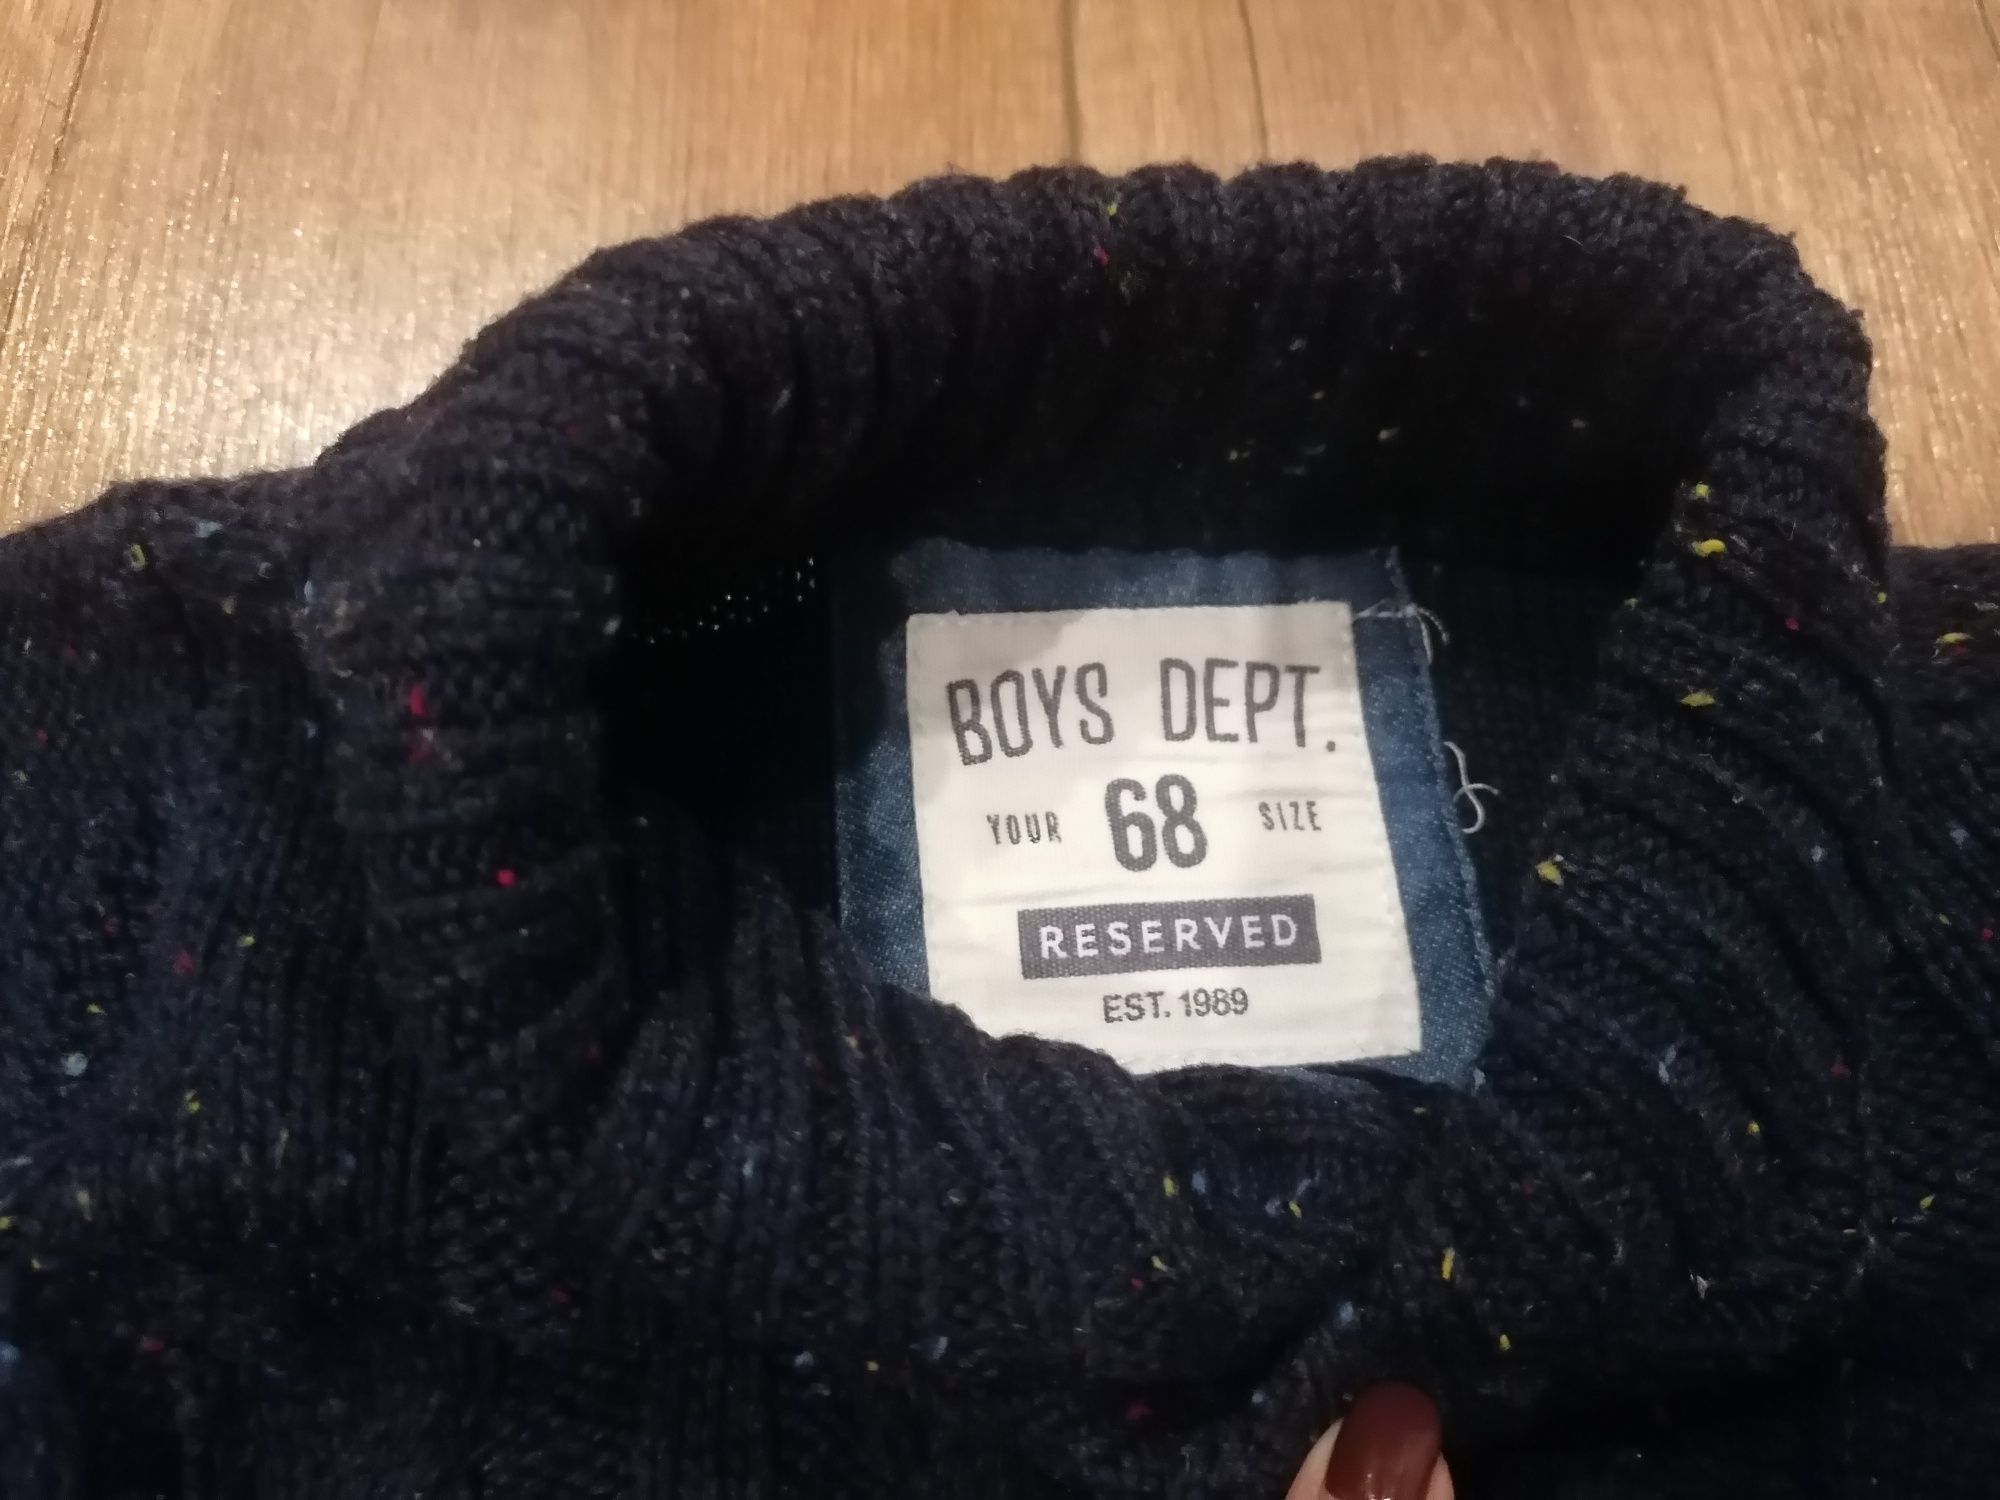 2x sweterek dla chłopca, rozmiar 68, h&m, reserved